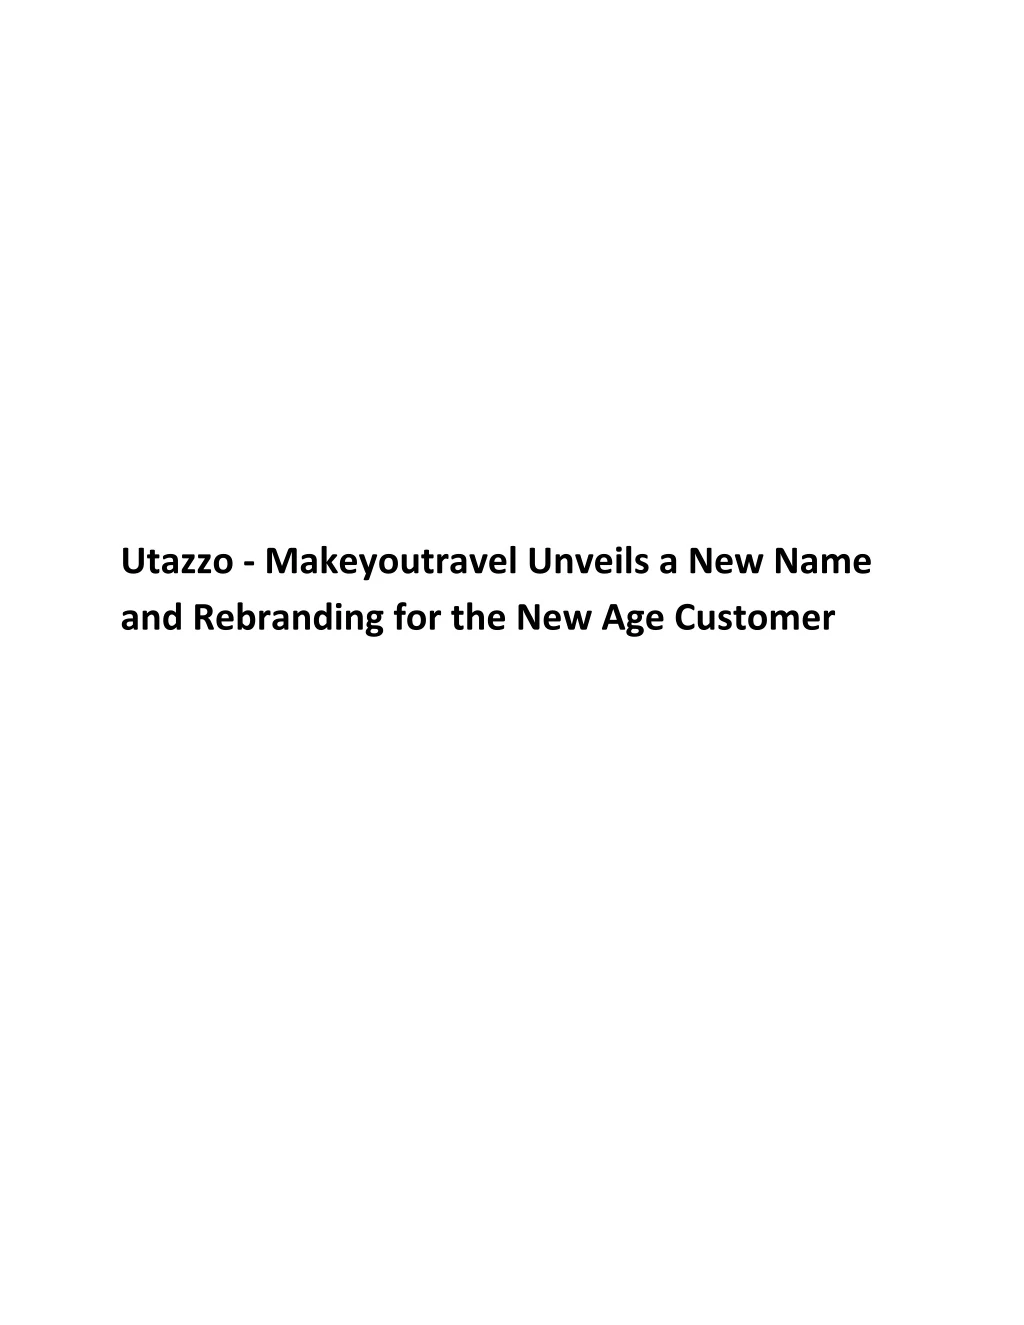 utazzo makeyoutravel unveils a new name